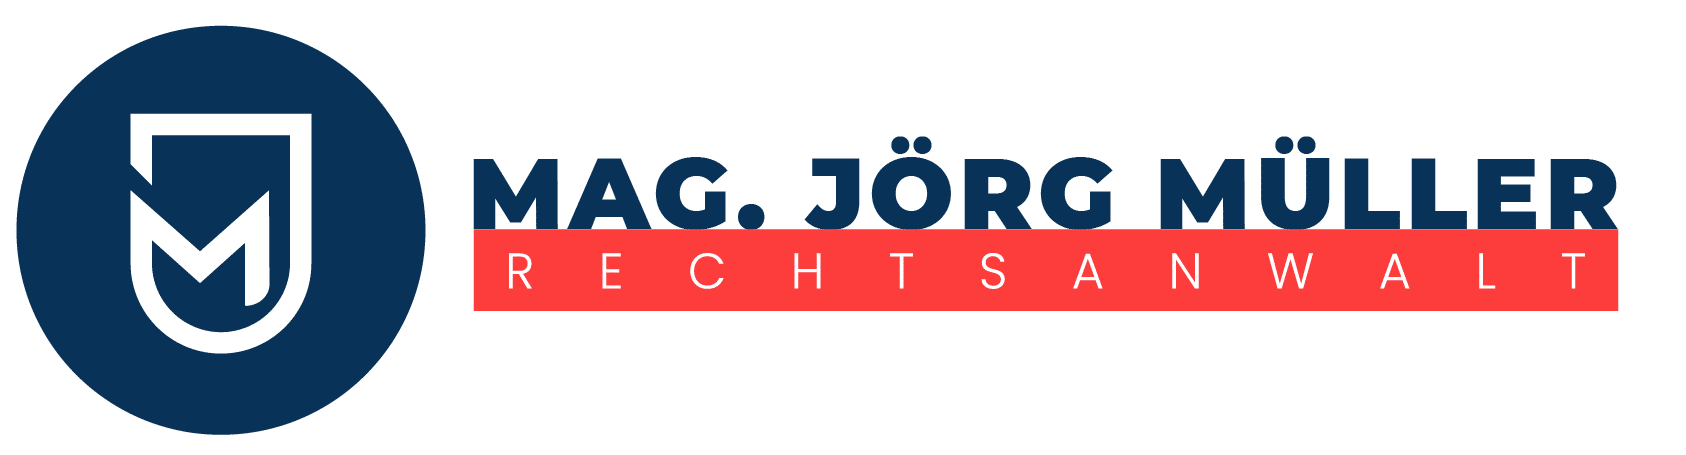 Mag. Joerg C. Mueller 1010 Wien Logo